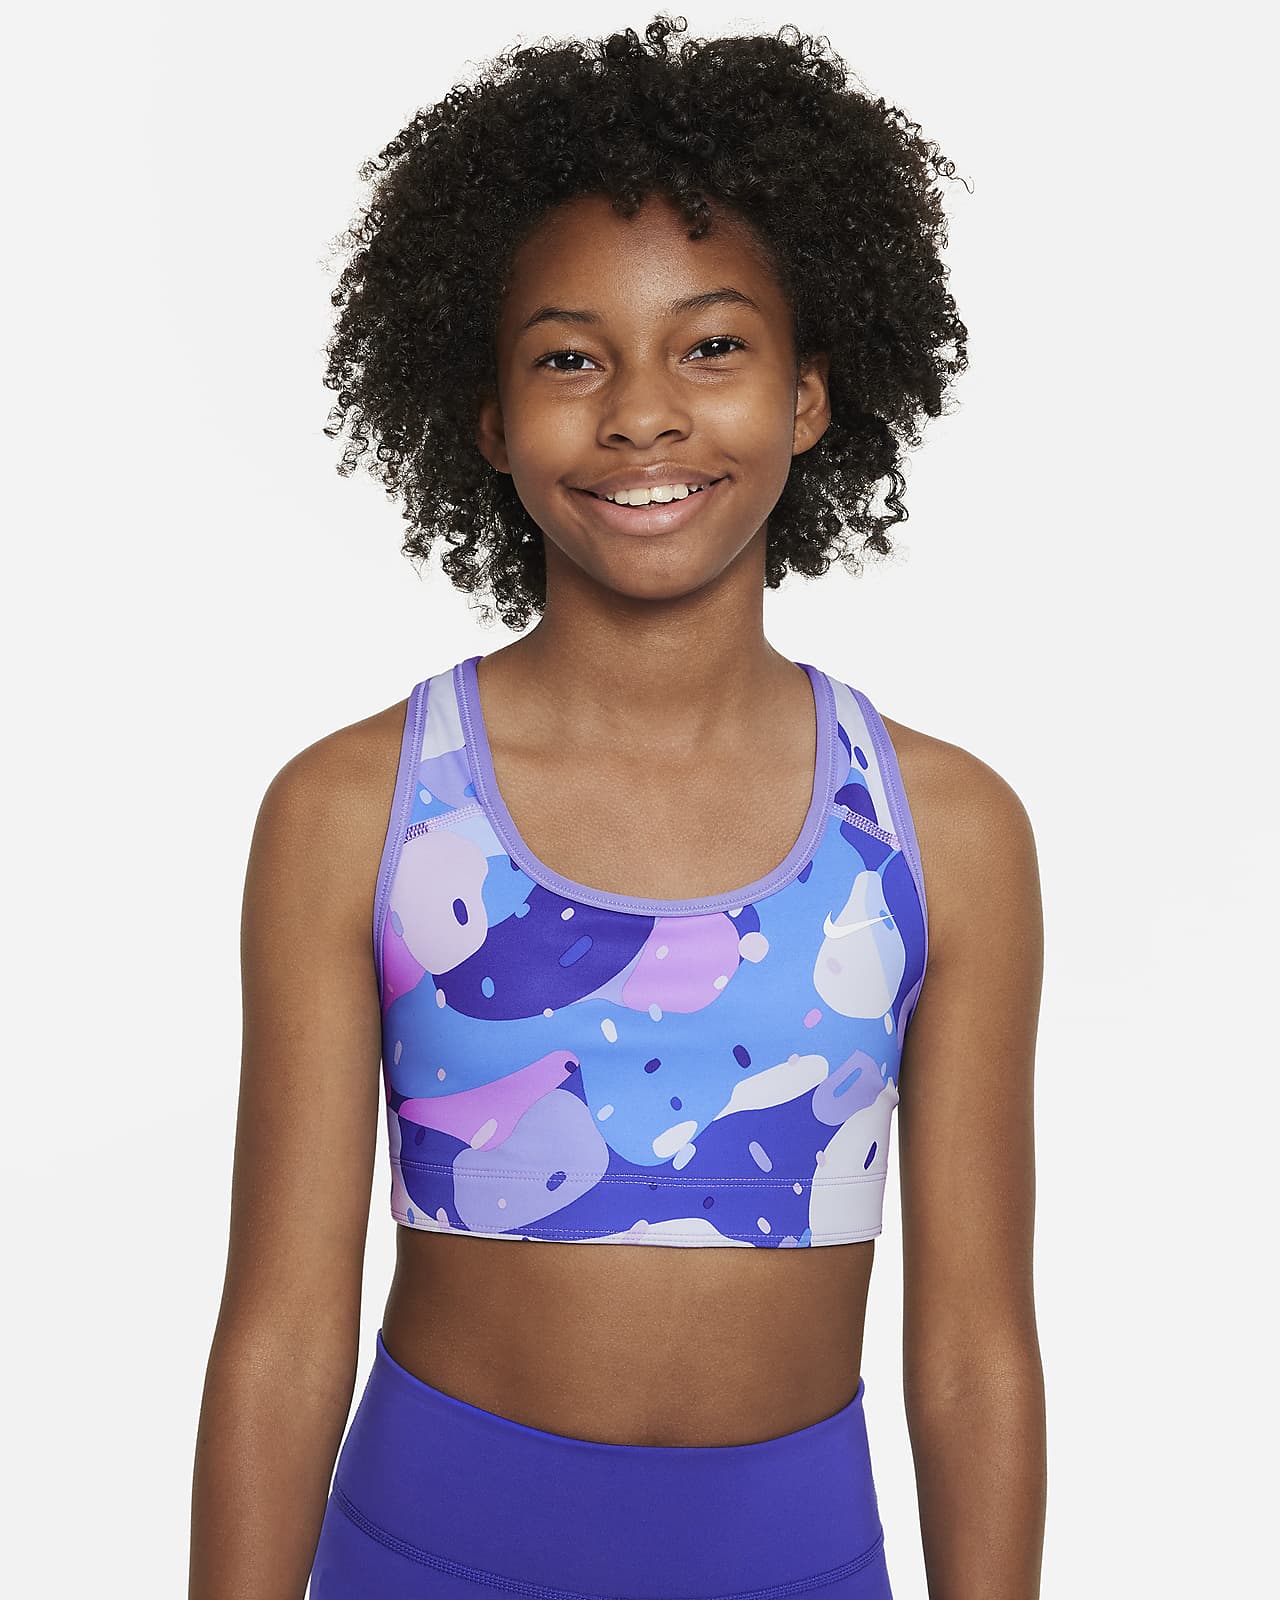 Buy Nike Big Kids Sports Bras Girls Pink online